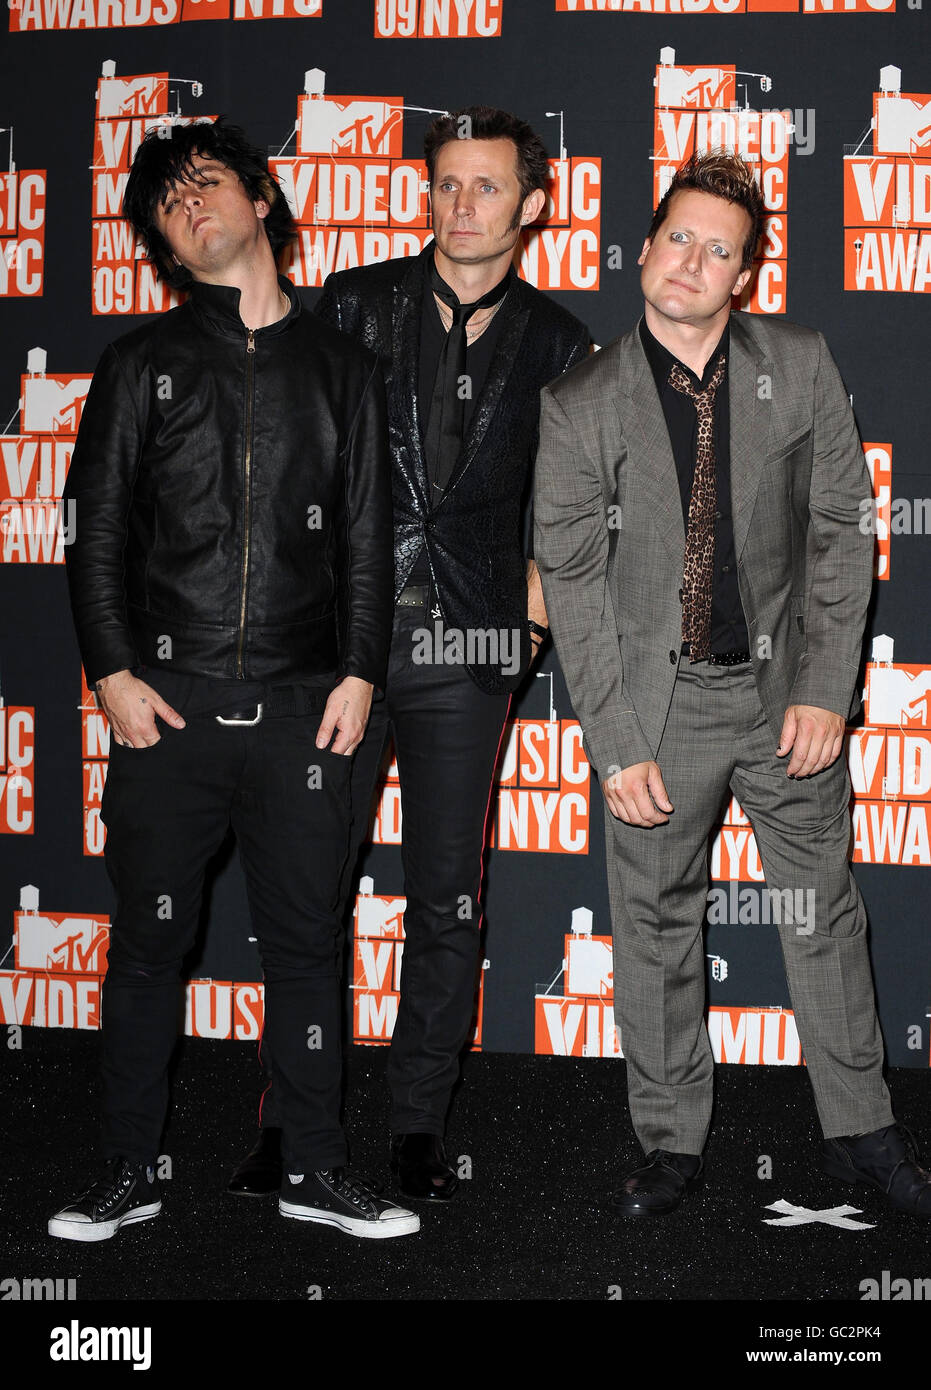 MTV Video Music Awards 2009 - Press Room - New York Stock Photo